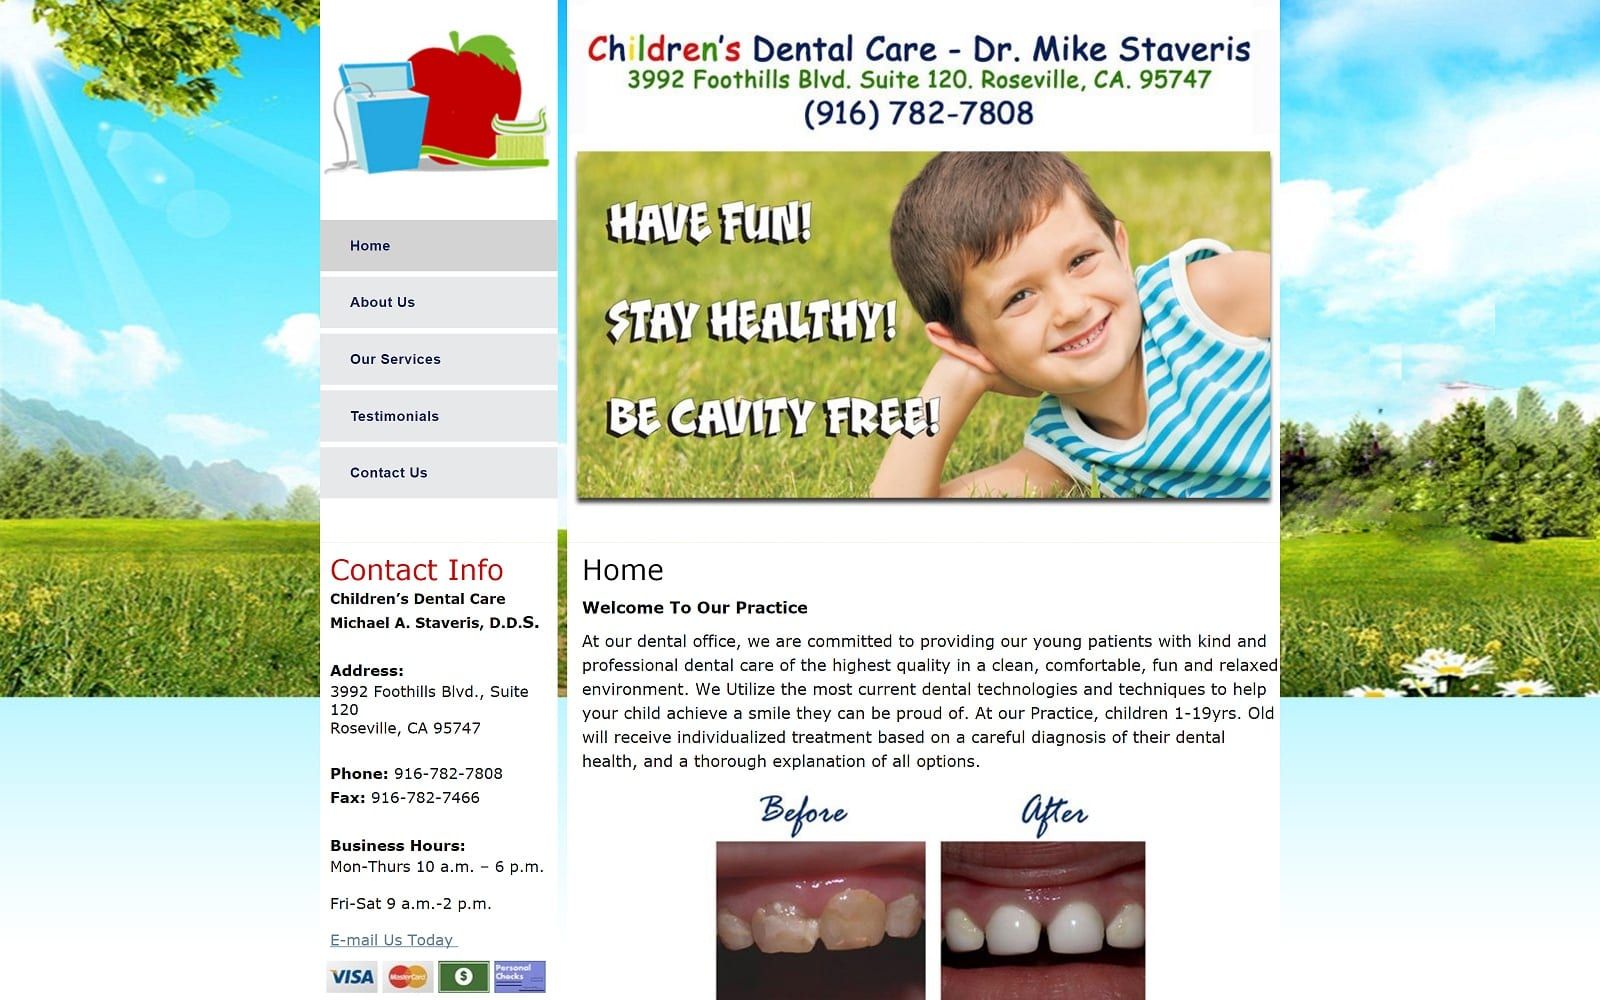 The screenshot of children's dental care - dr. Mike staveris kiddentists. Com website